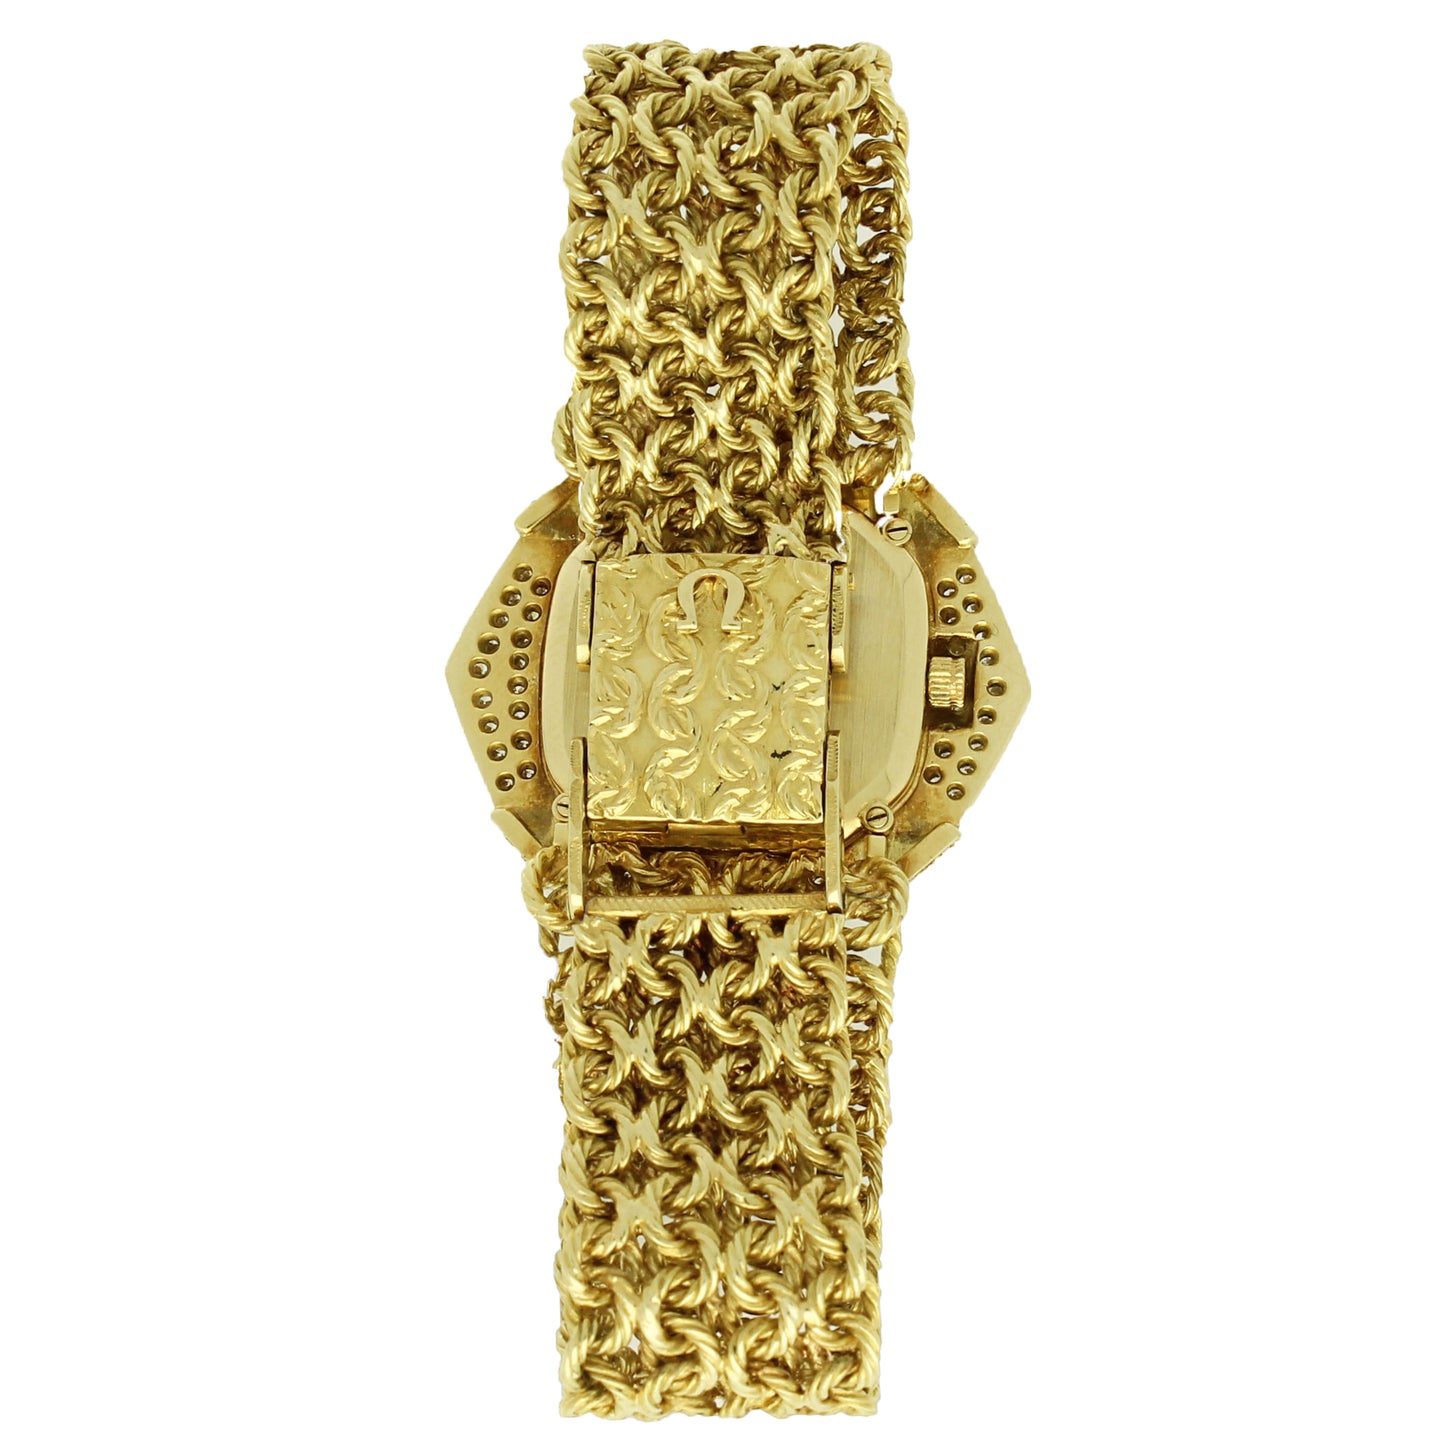 18ct yellow gold and diamond set bracelet watch. Made 1975